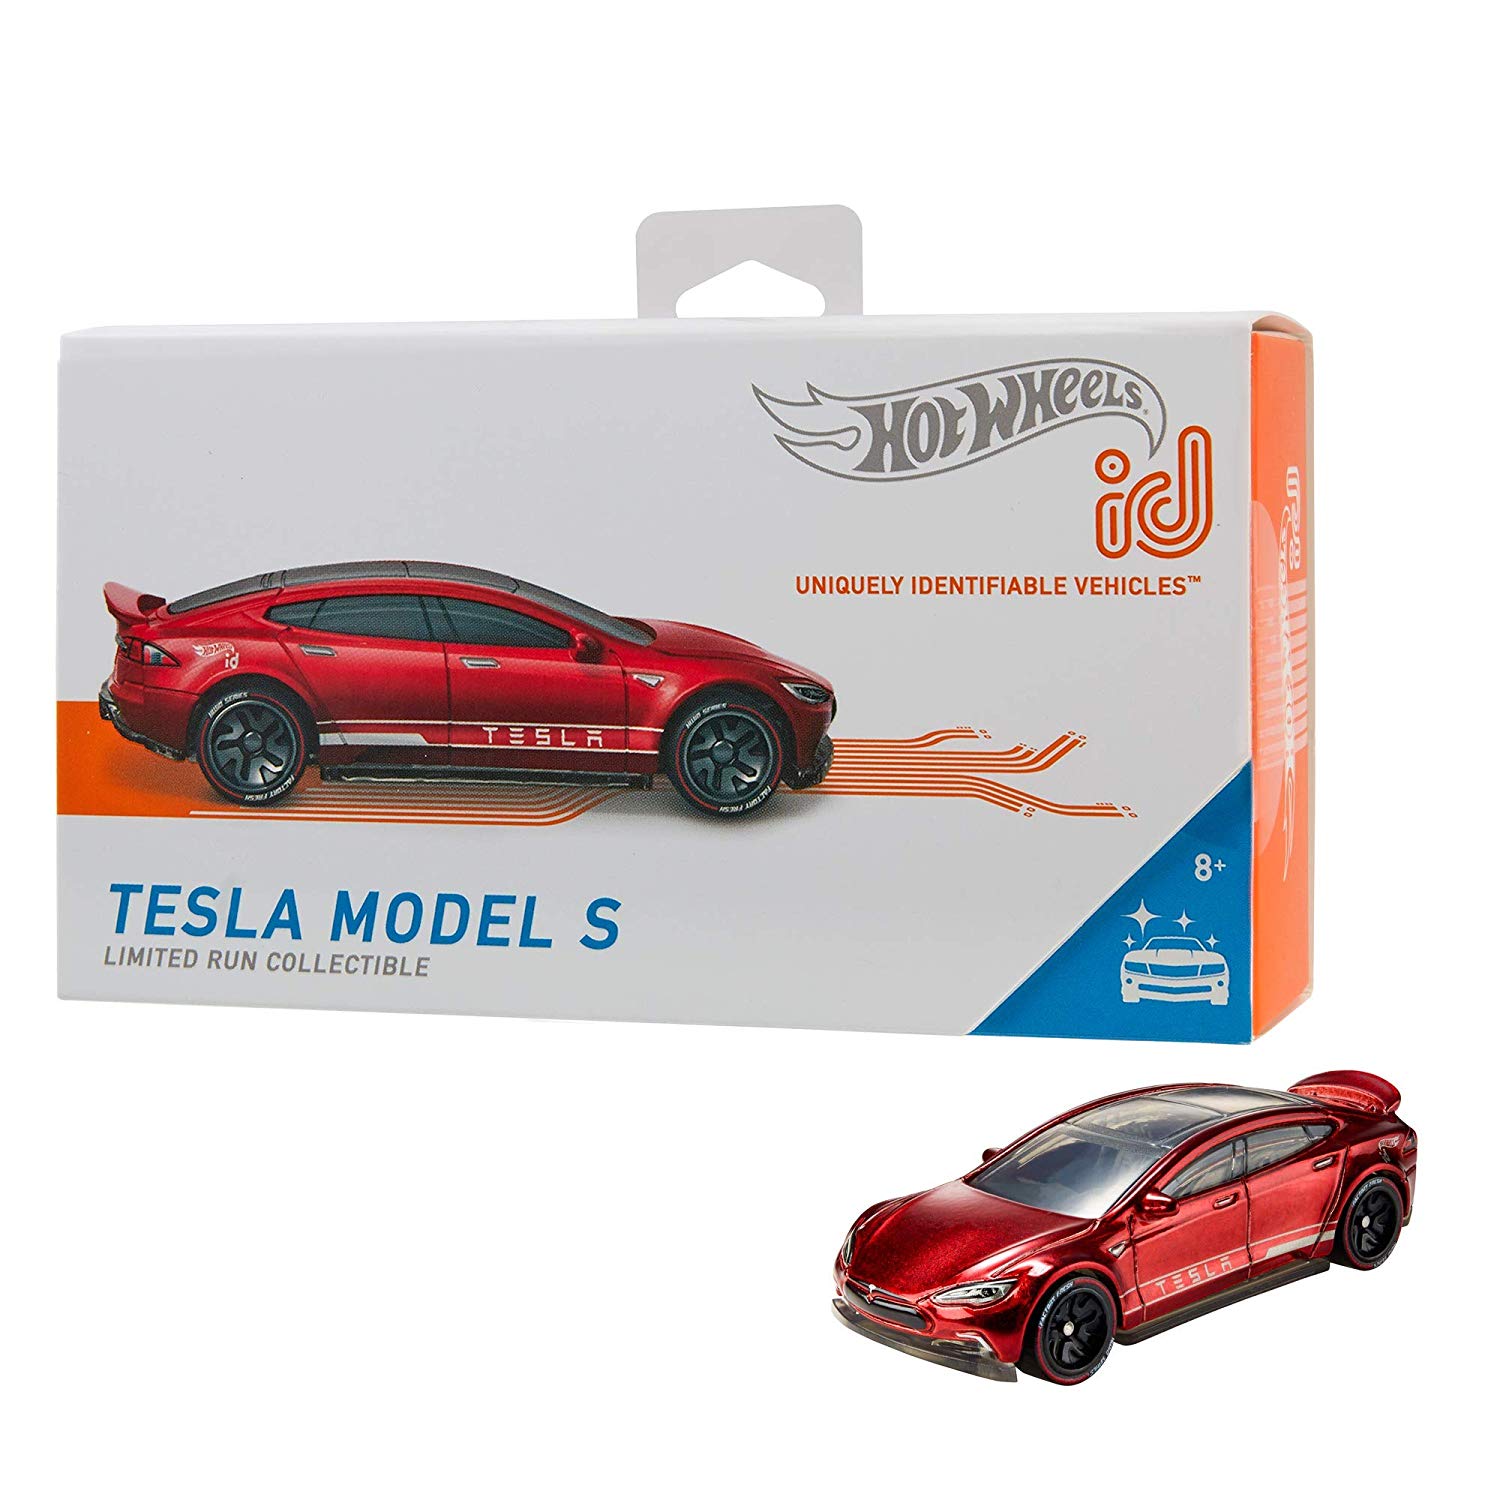 Tesla Hot Wheels